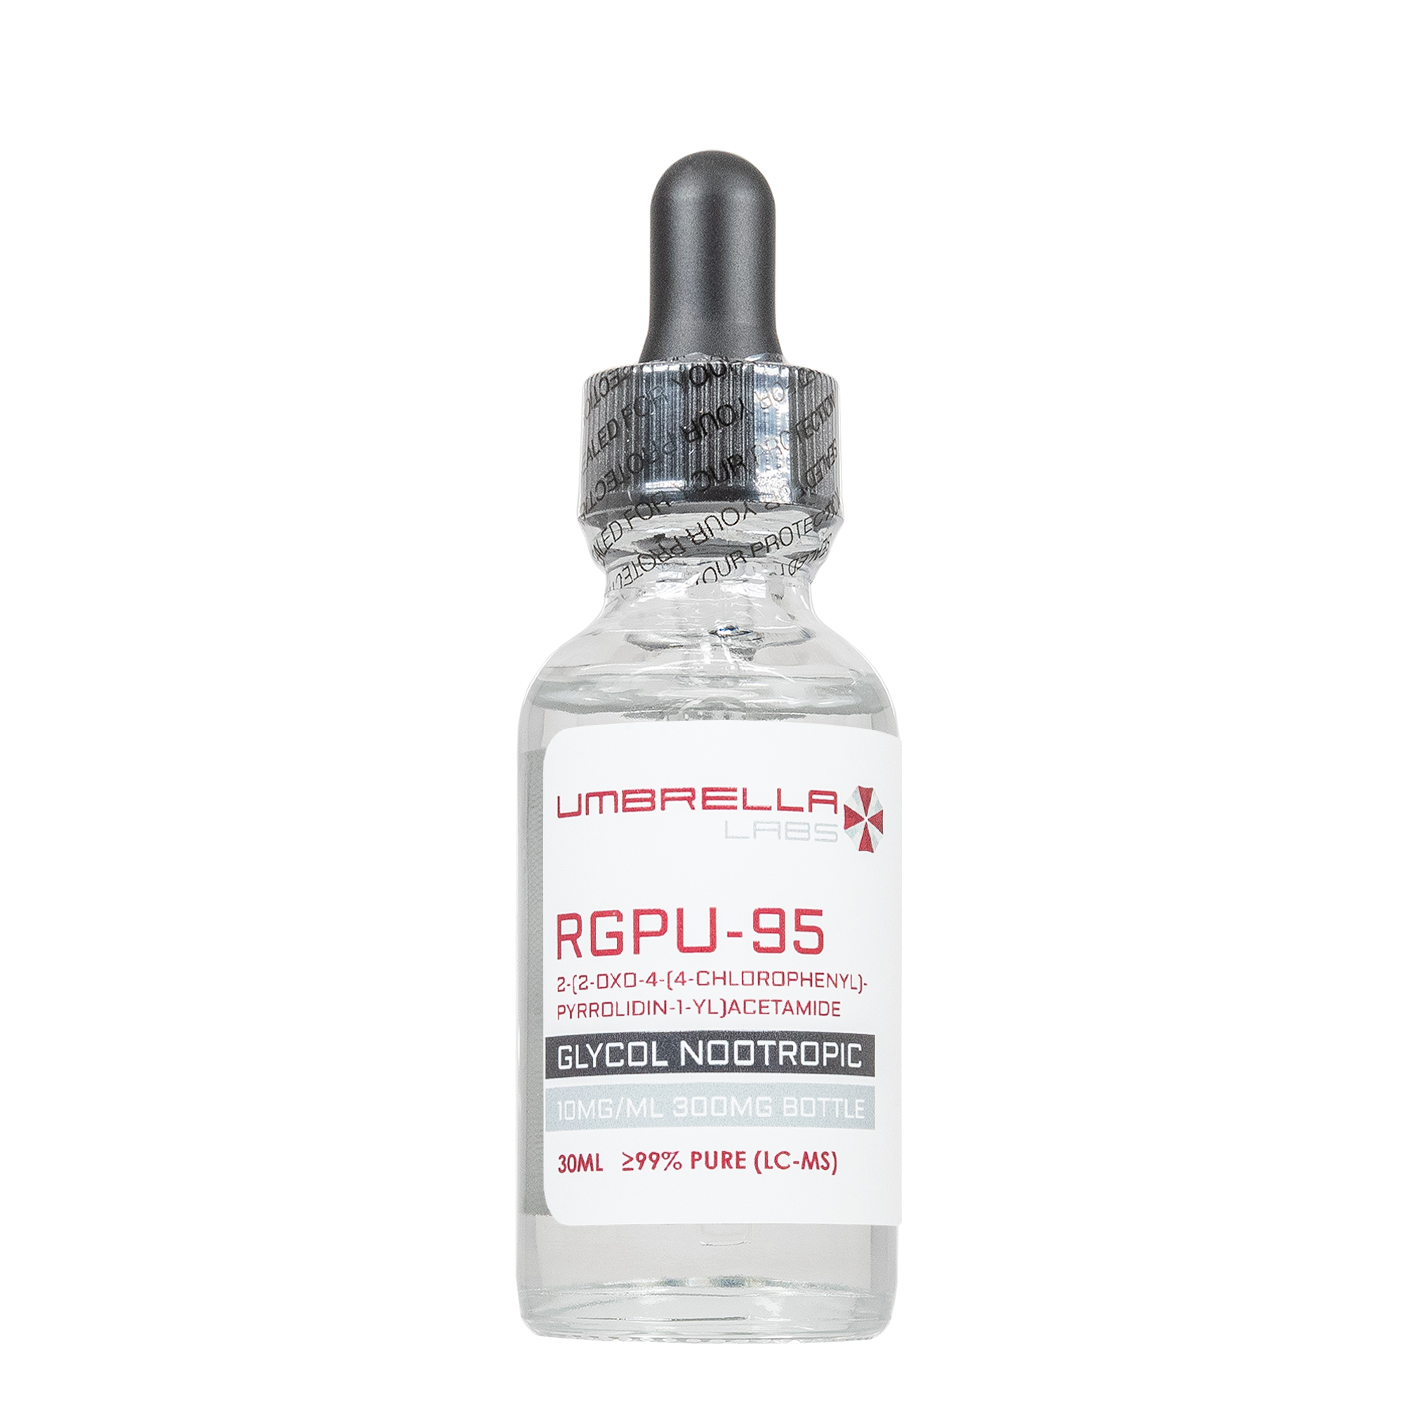 rgpu 95 (p cl phenylpiracetam) 30ml liquid (10mg/ml, 300mg bottle)